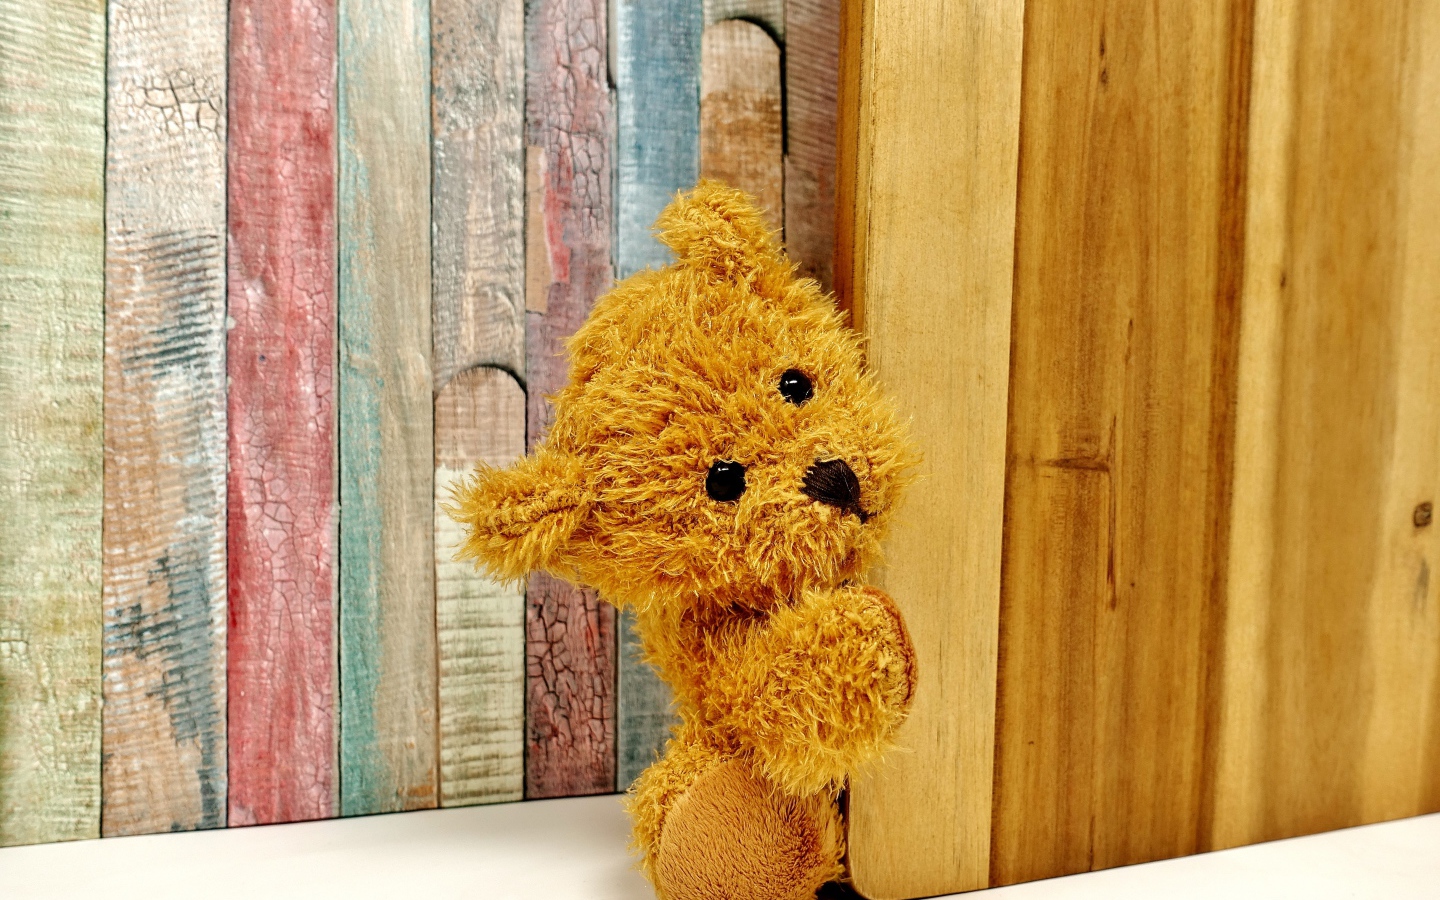 Teddy bear peeks out of the door